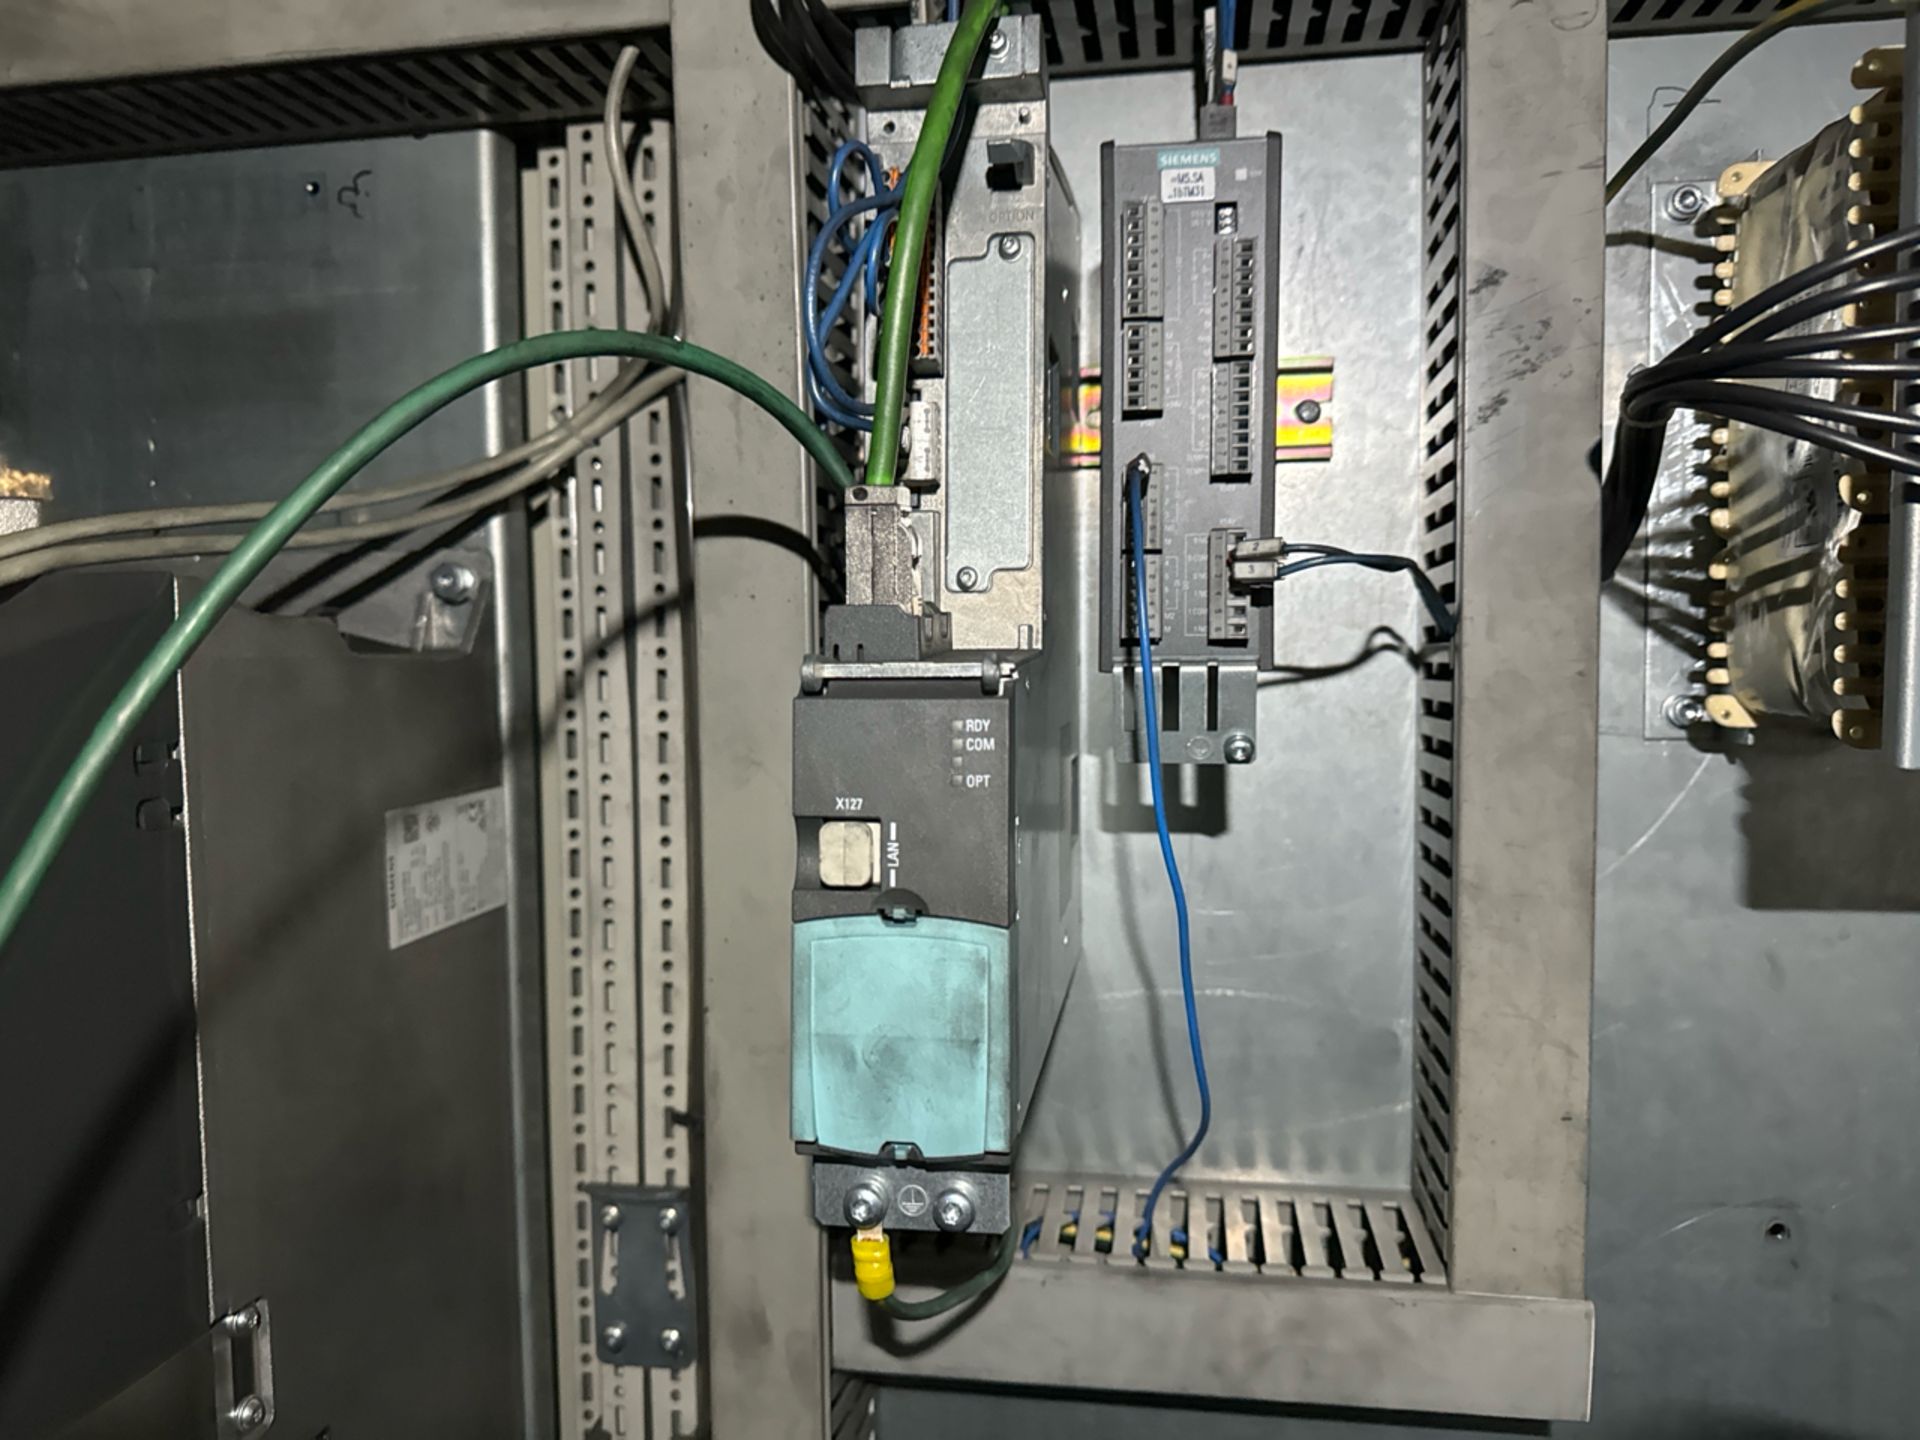 Siemens Sinamics Control Unit CU320-2PN